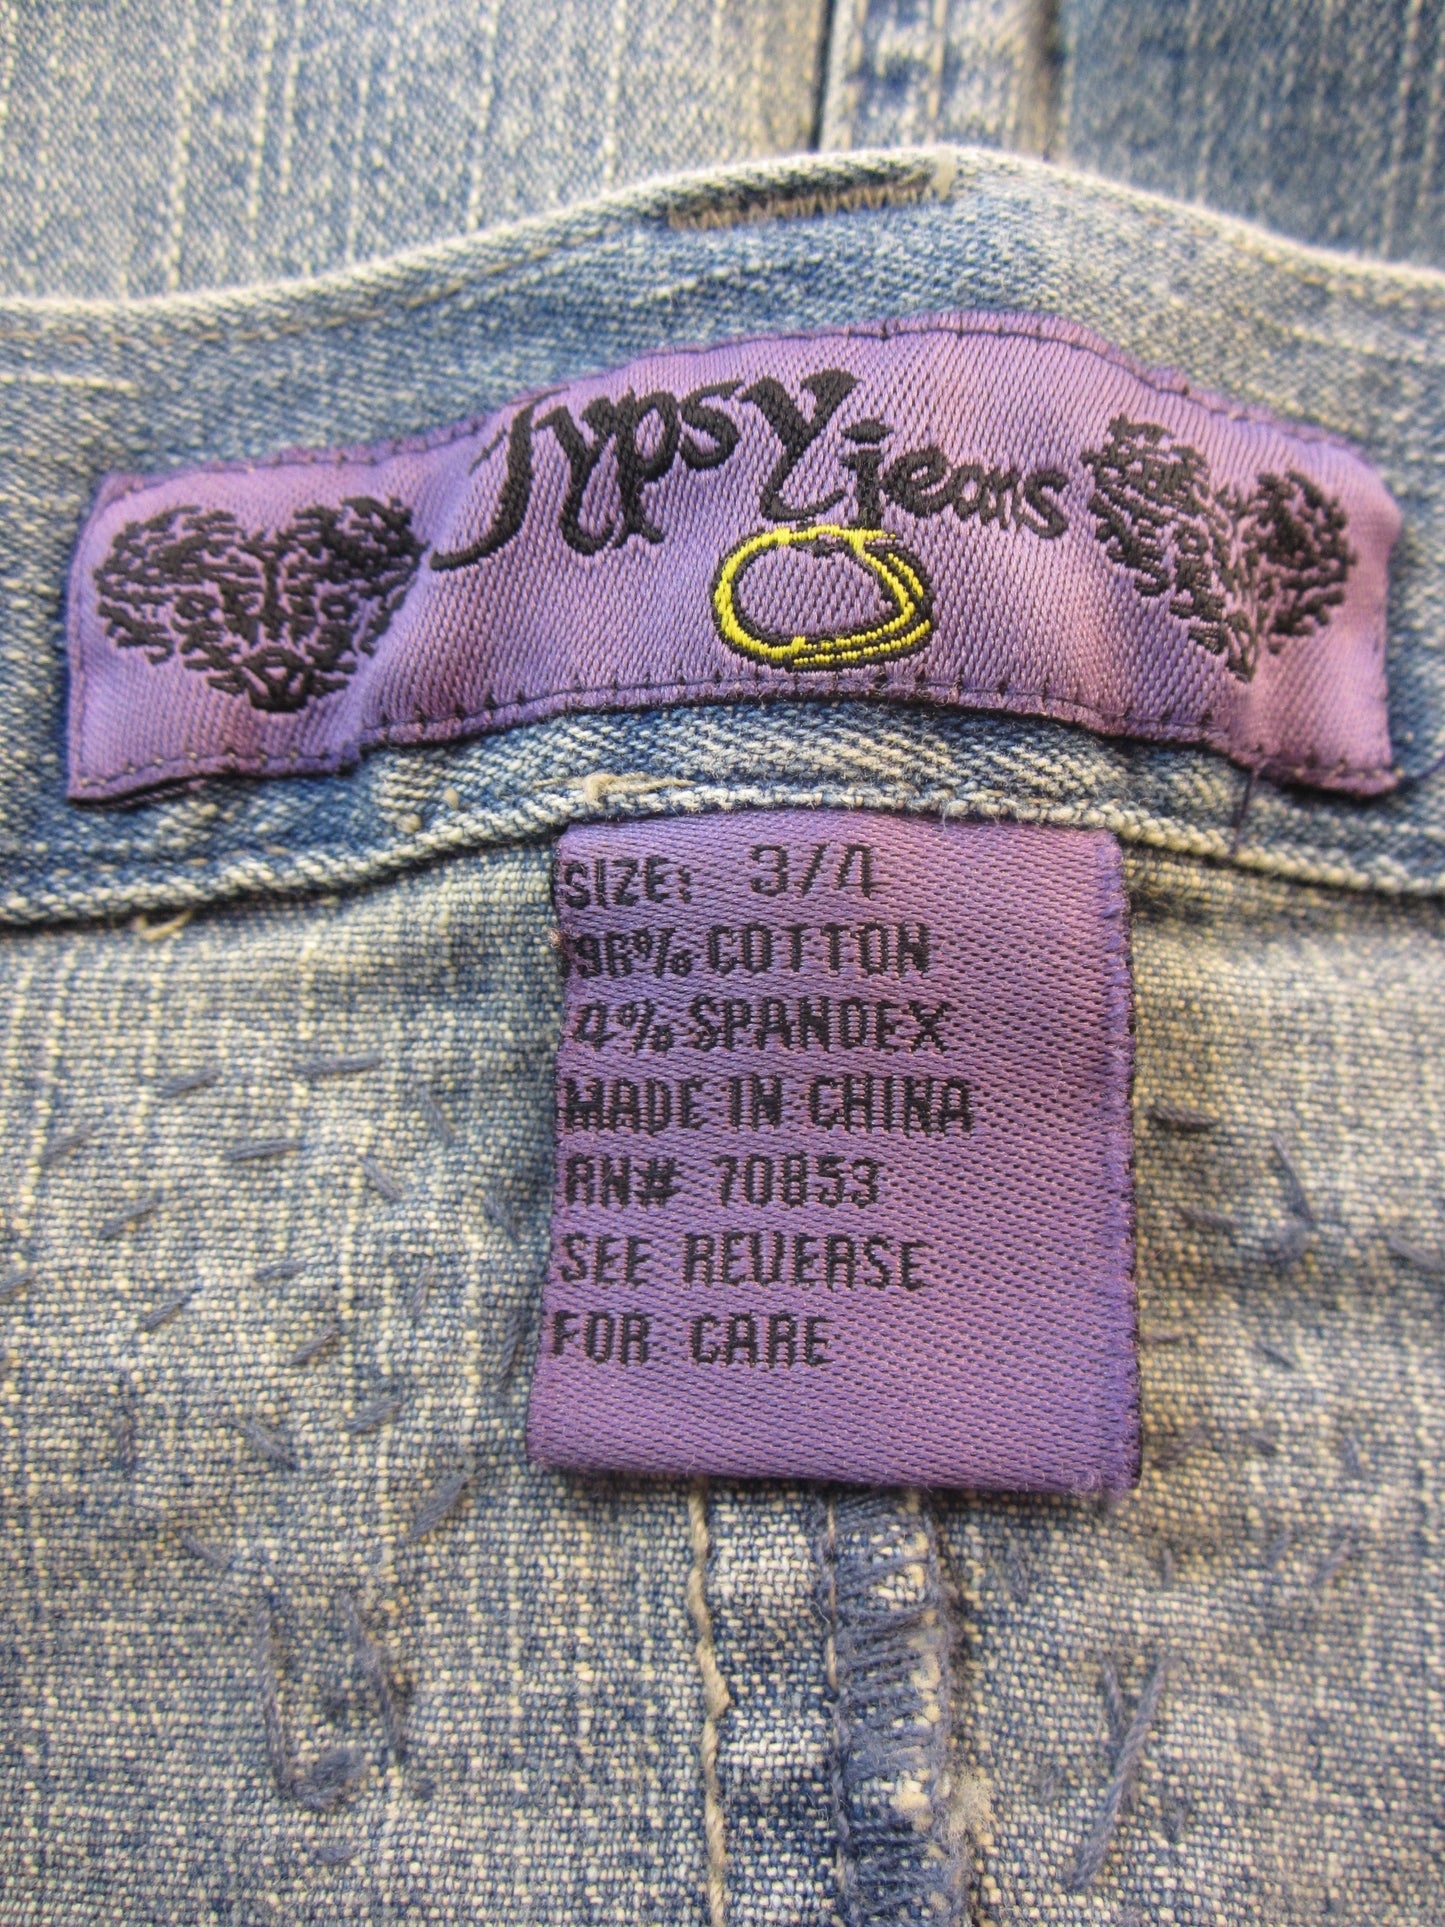 Gypsy Jeans 80's Skirt Denim Beaded Embellished Size 3/4 SKU 000102